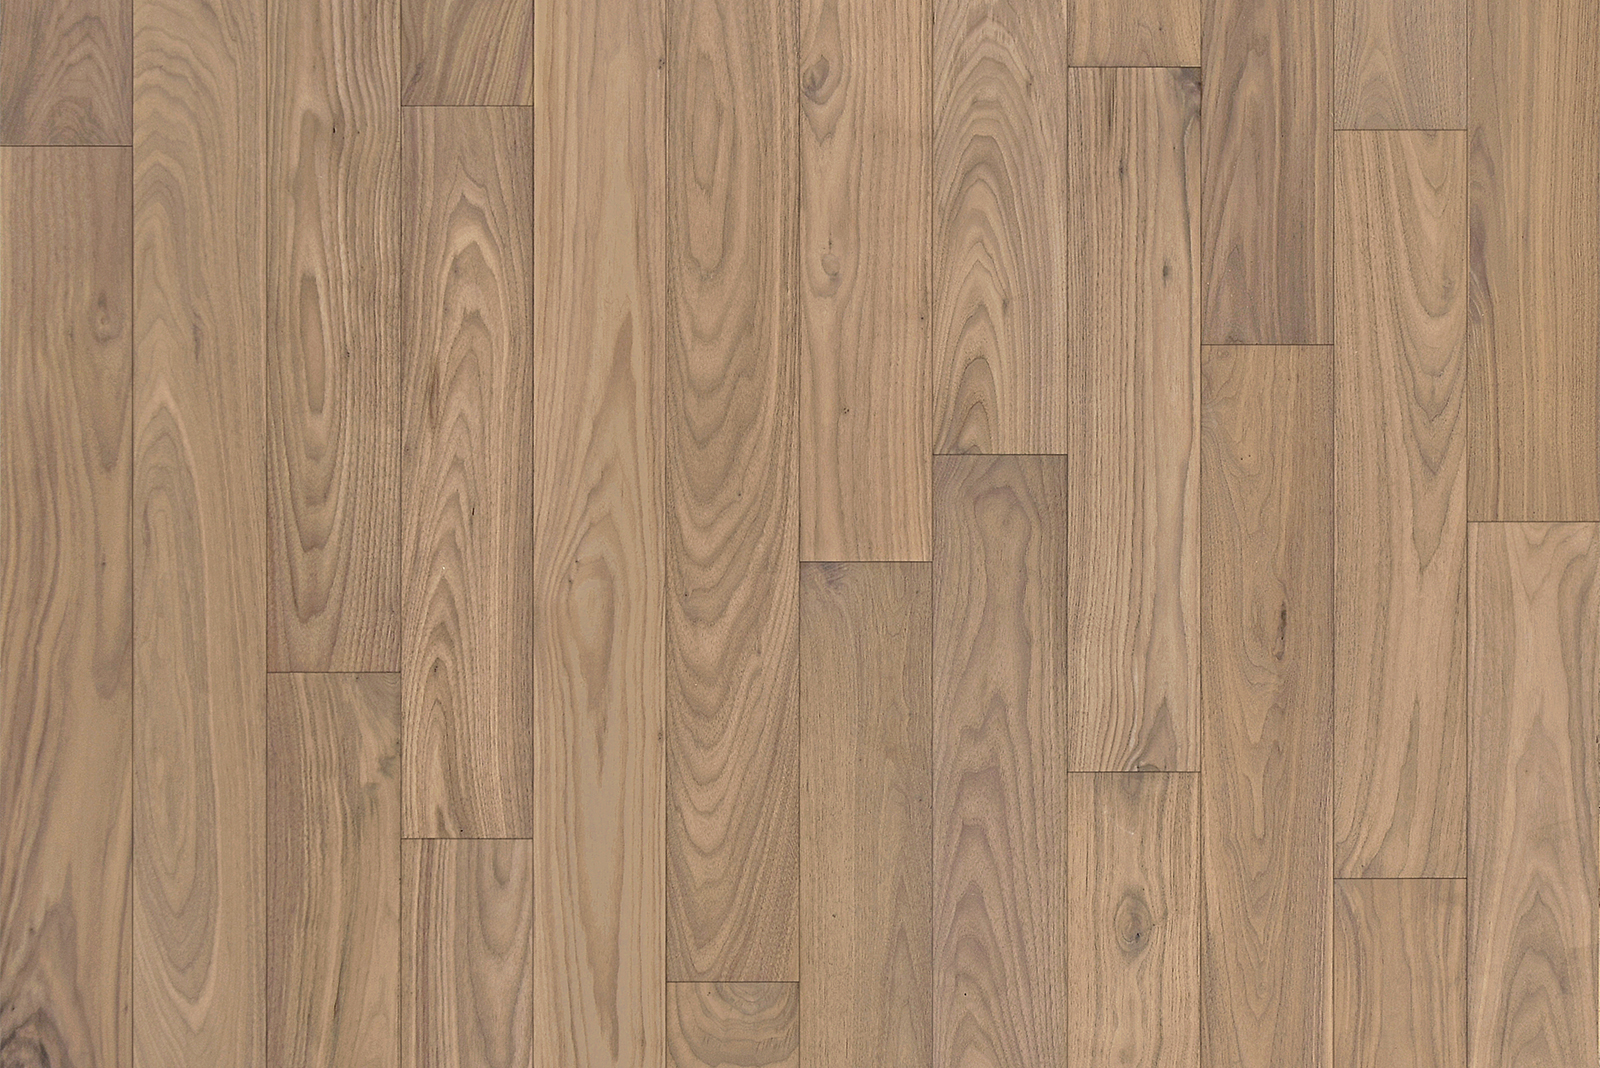 walnut wood flooring texture